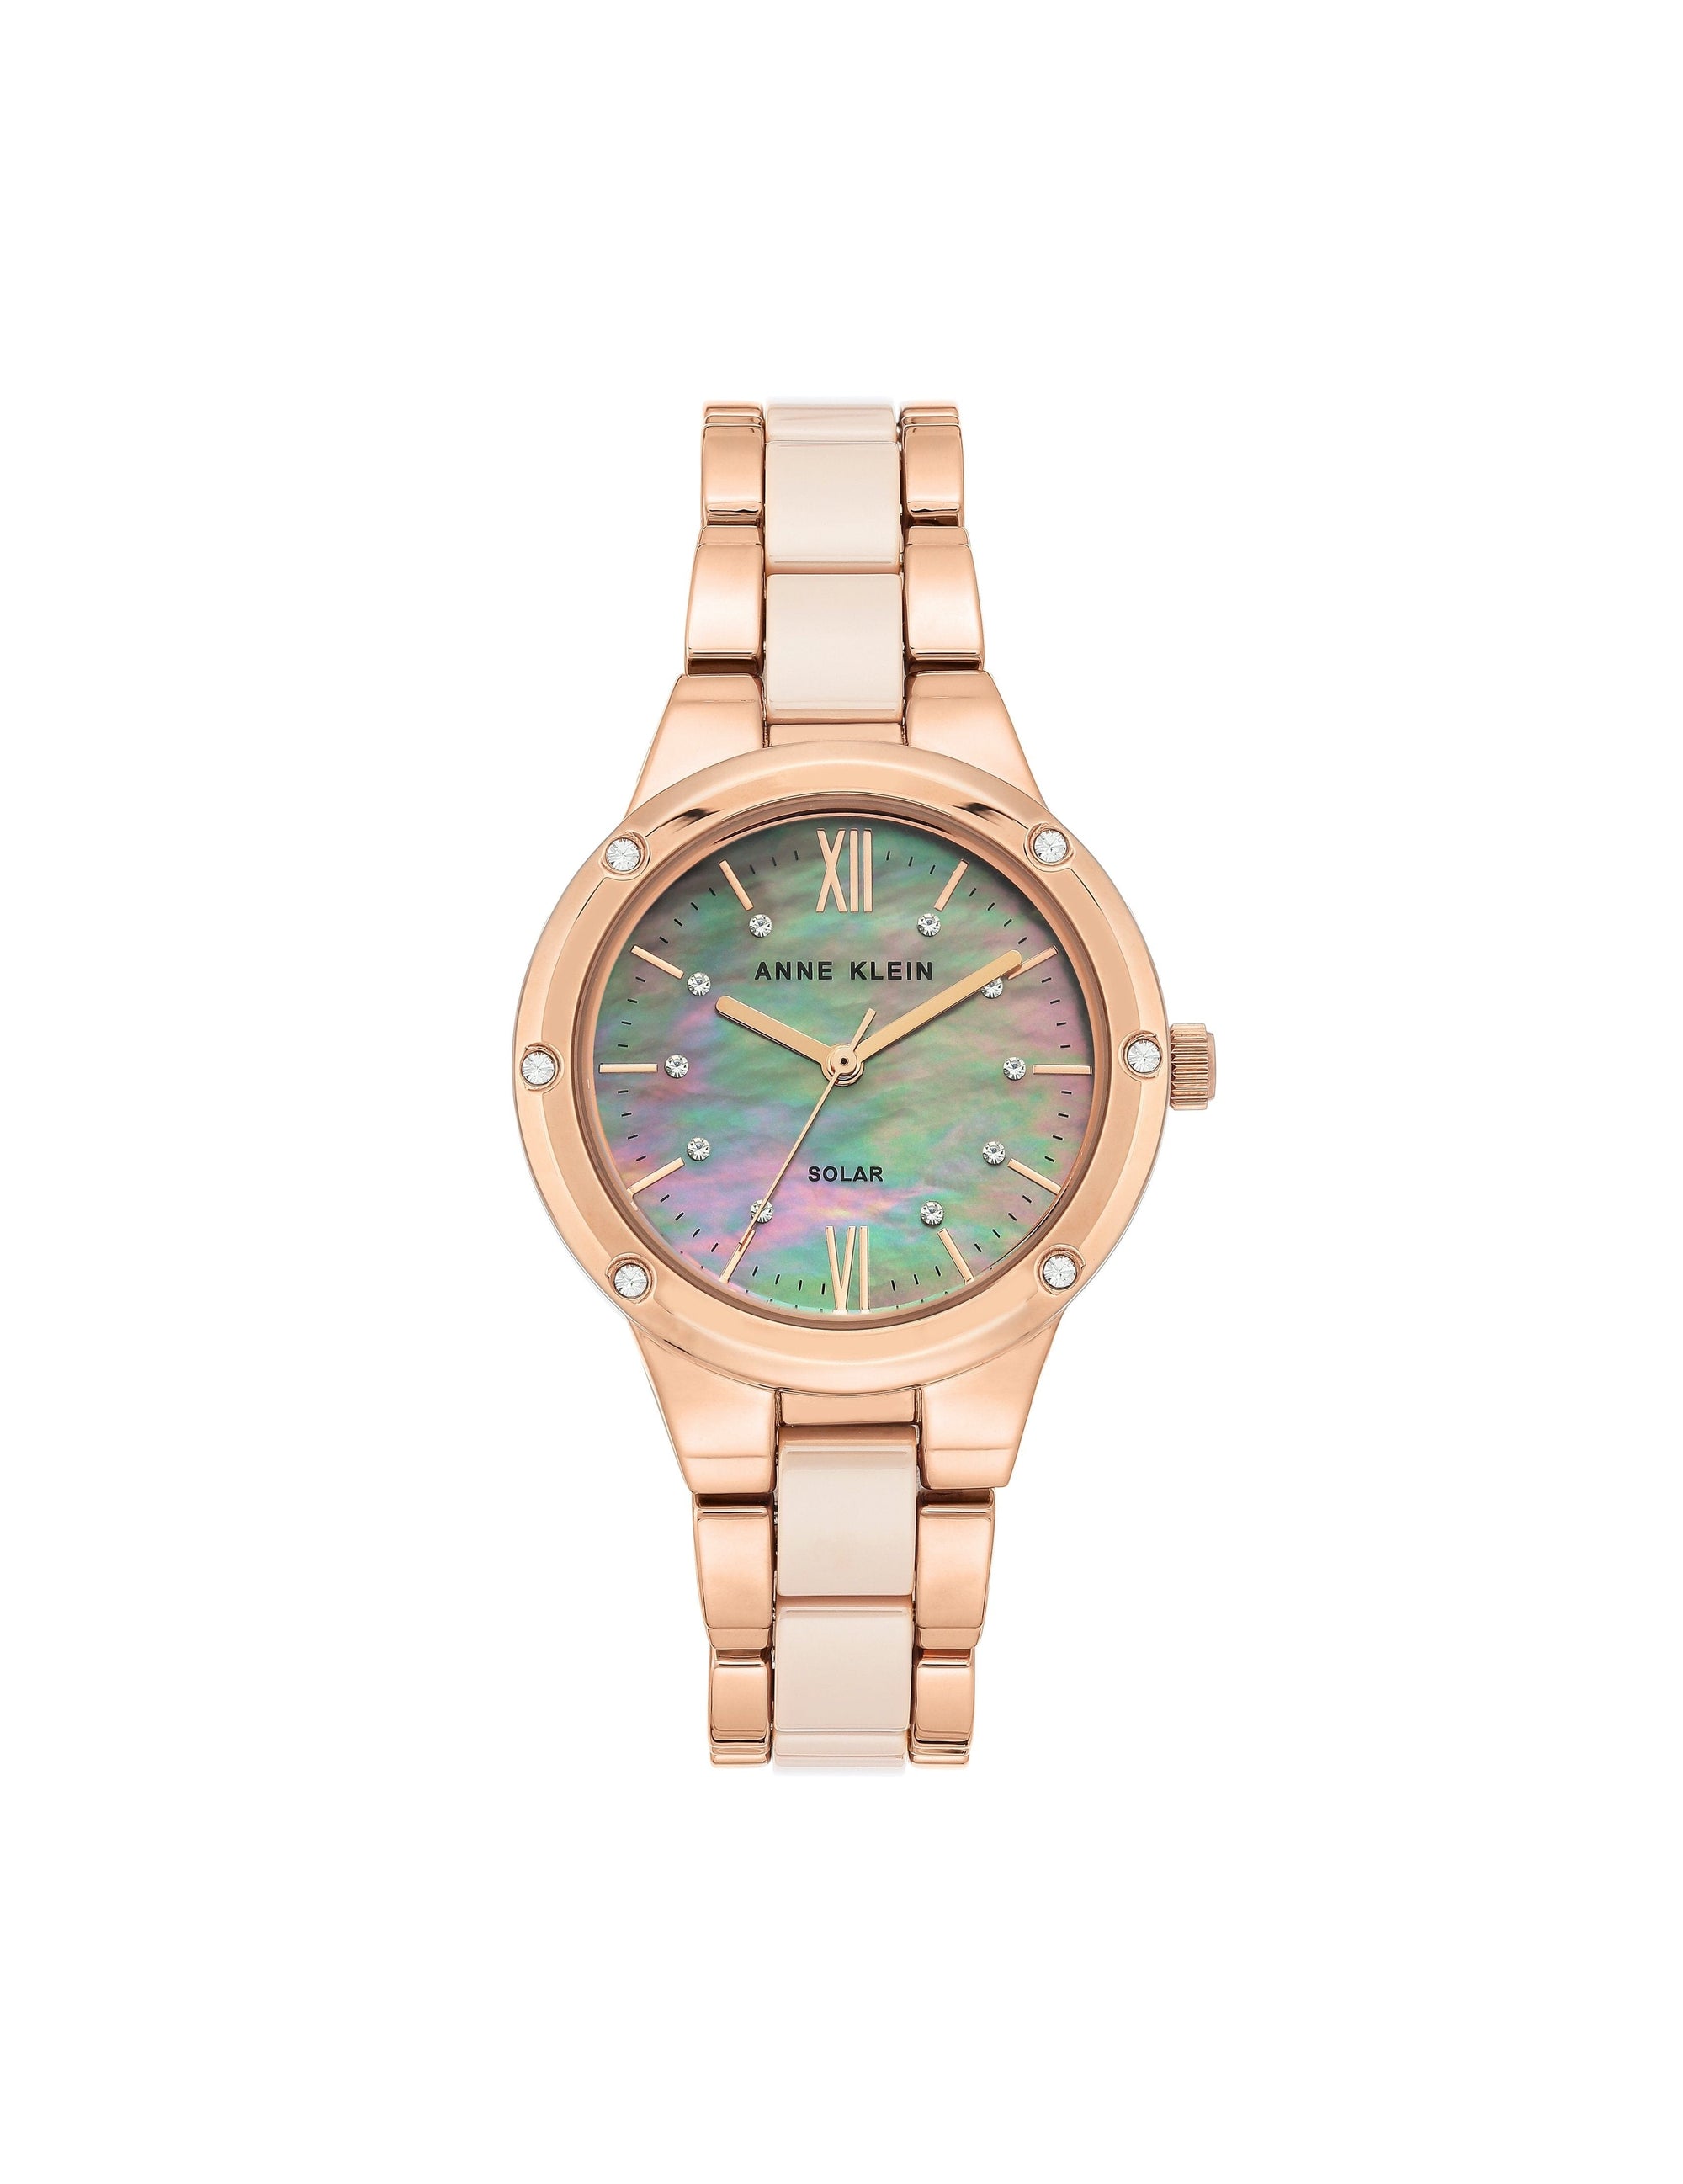 considered solar powered swarovski crystal accented rose gold-tone light pink ceramic bracelet watch